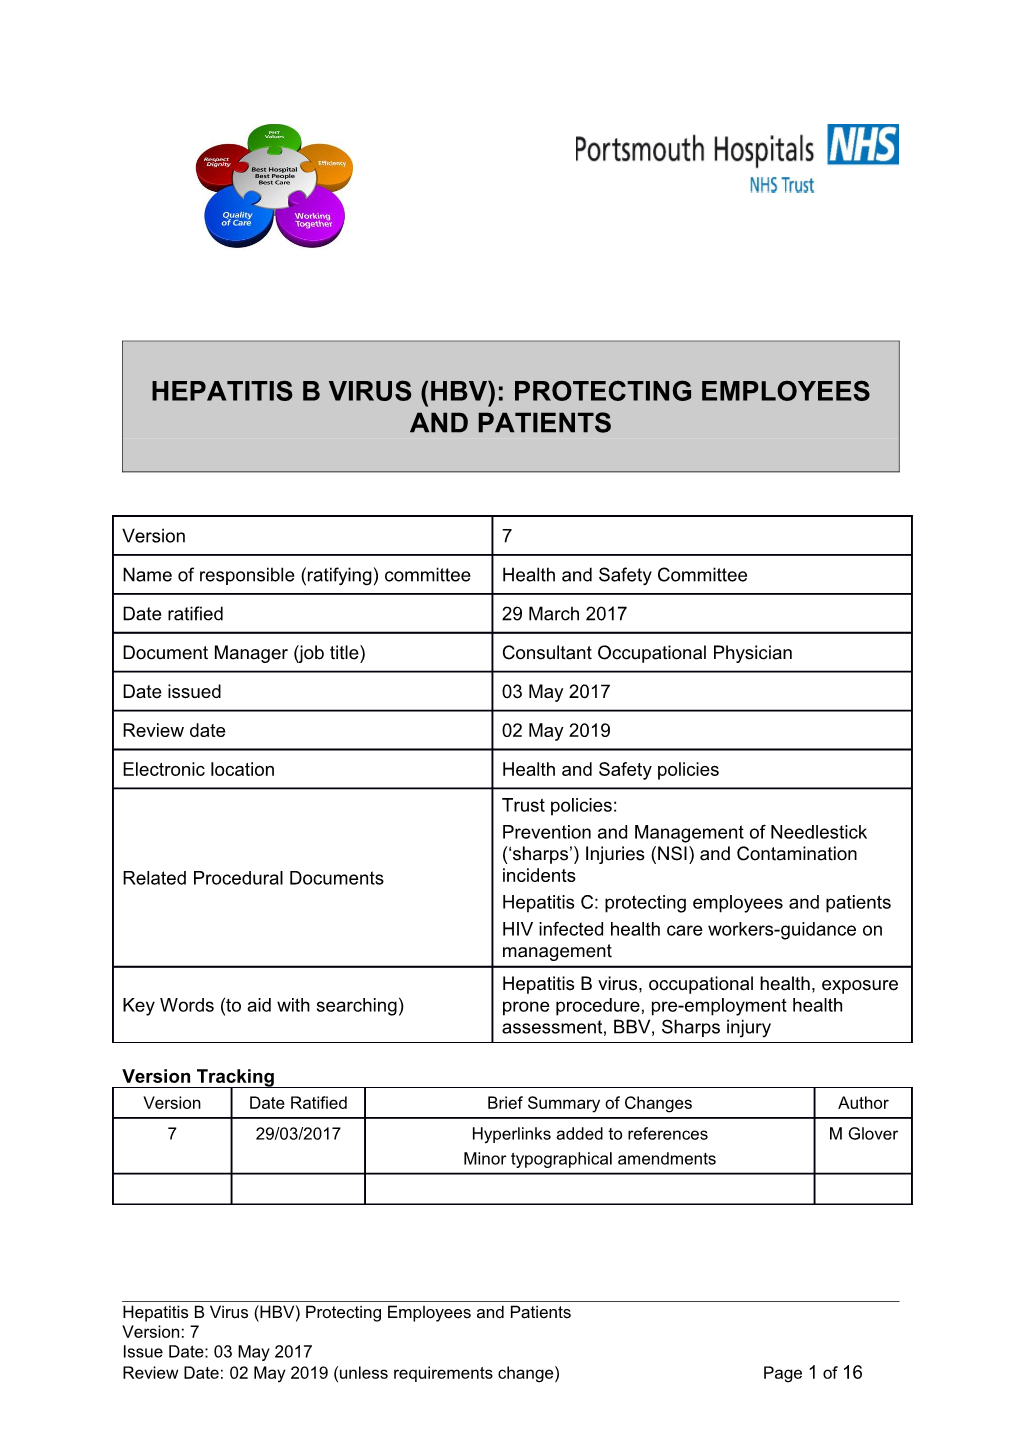 Hepatitis B Virus (Hbv): Protecting Employees and Patients